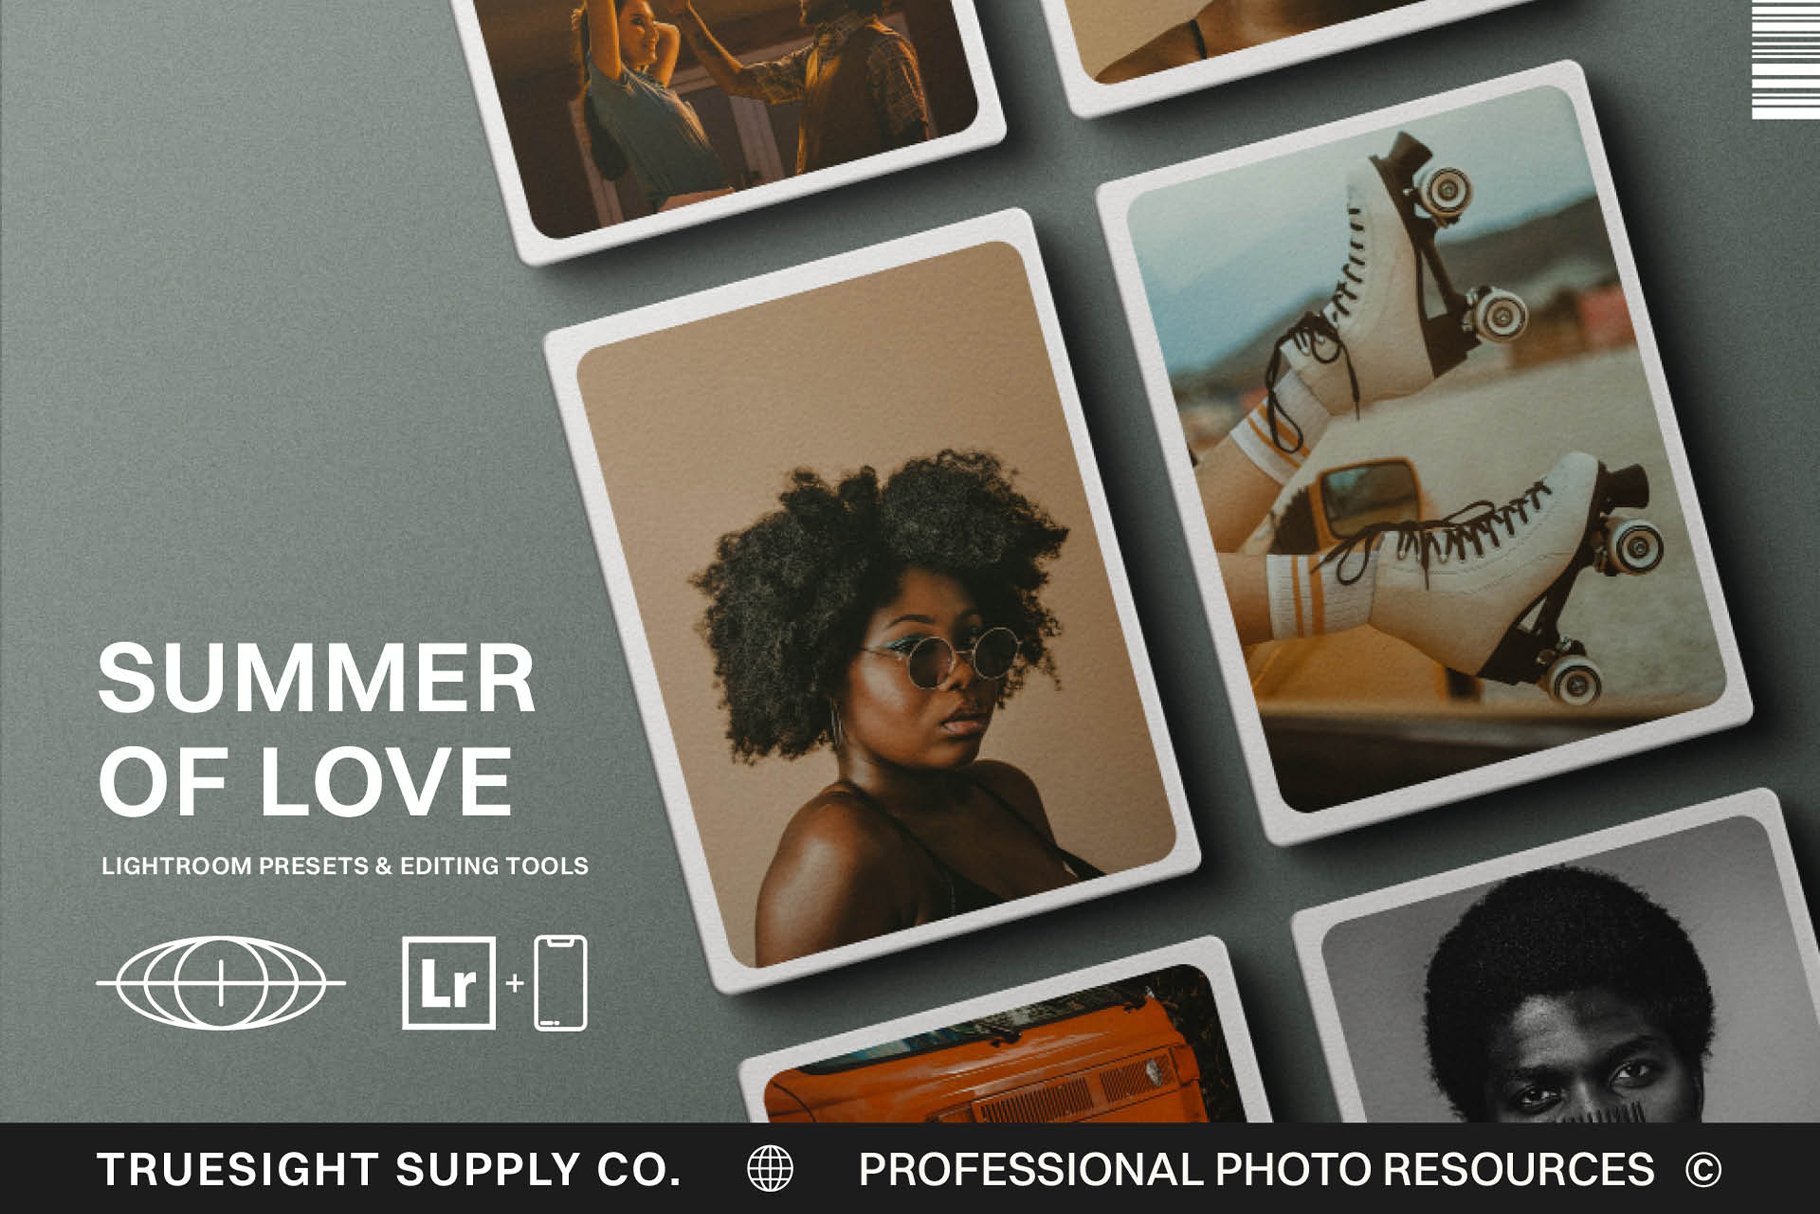 Summer Of Love - Lightroom Presetscover image.